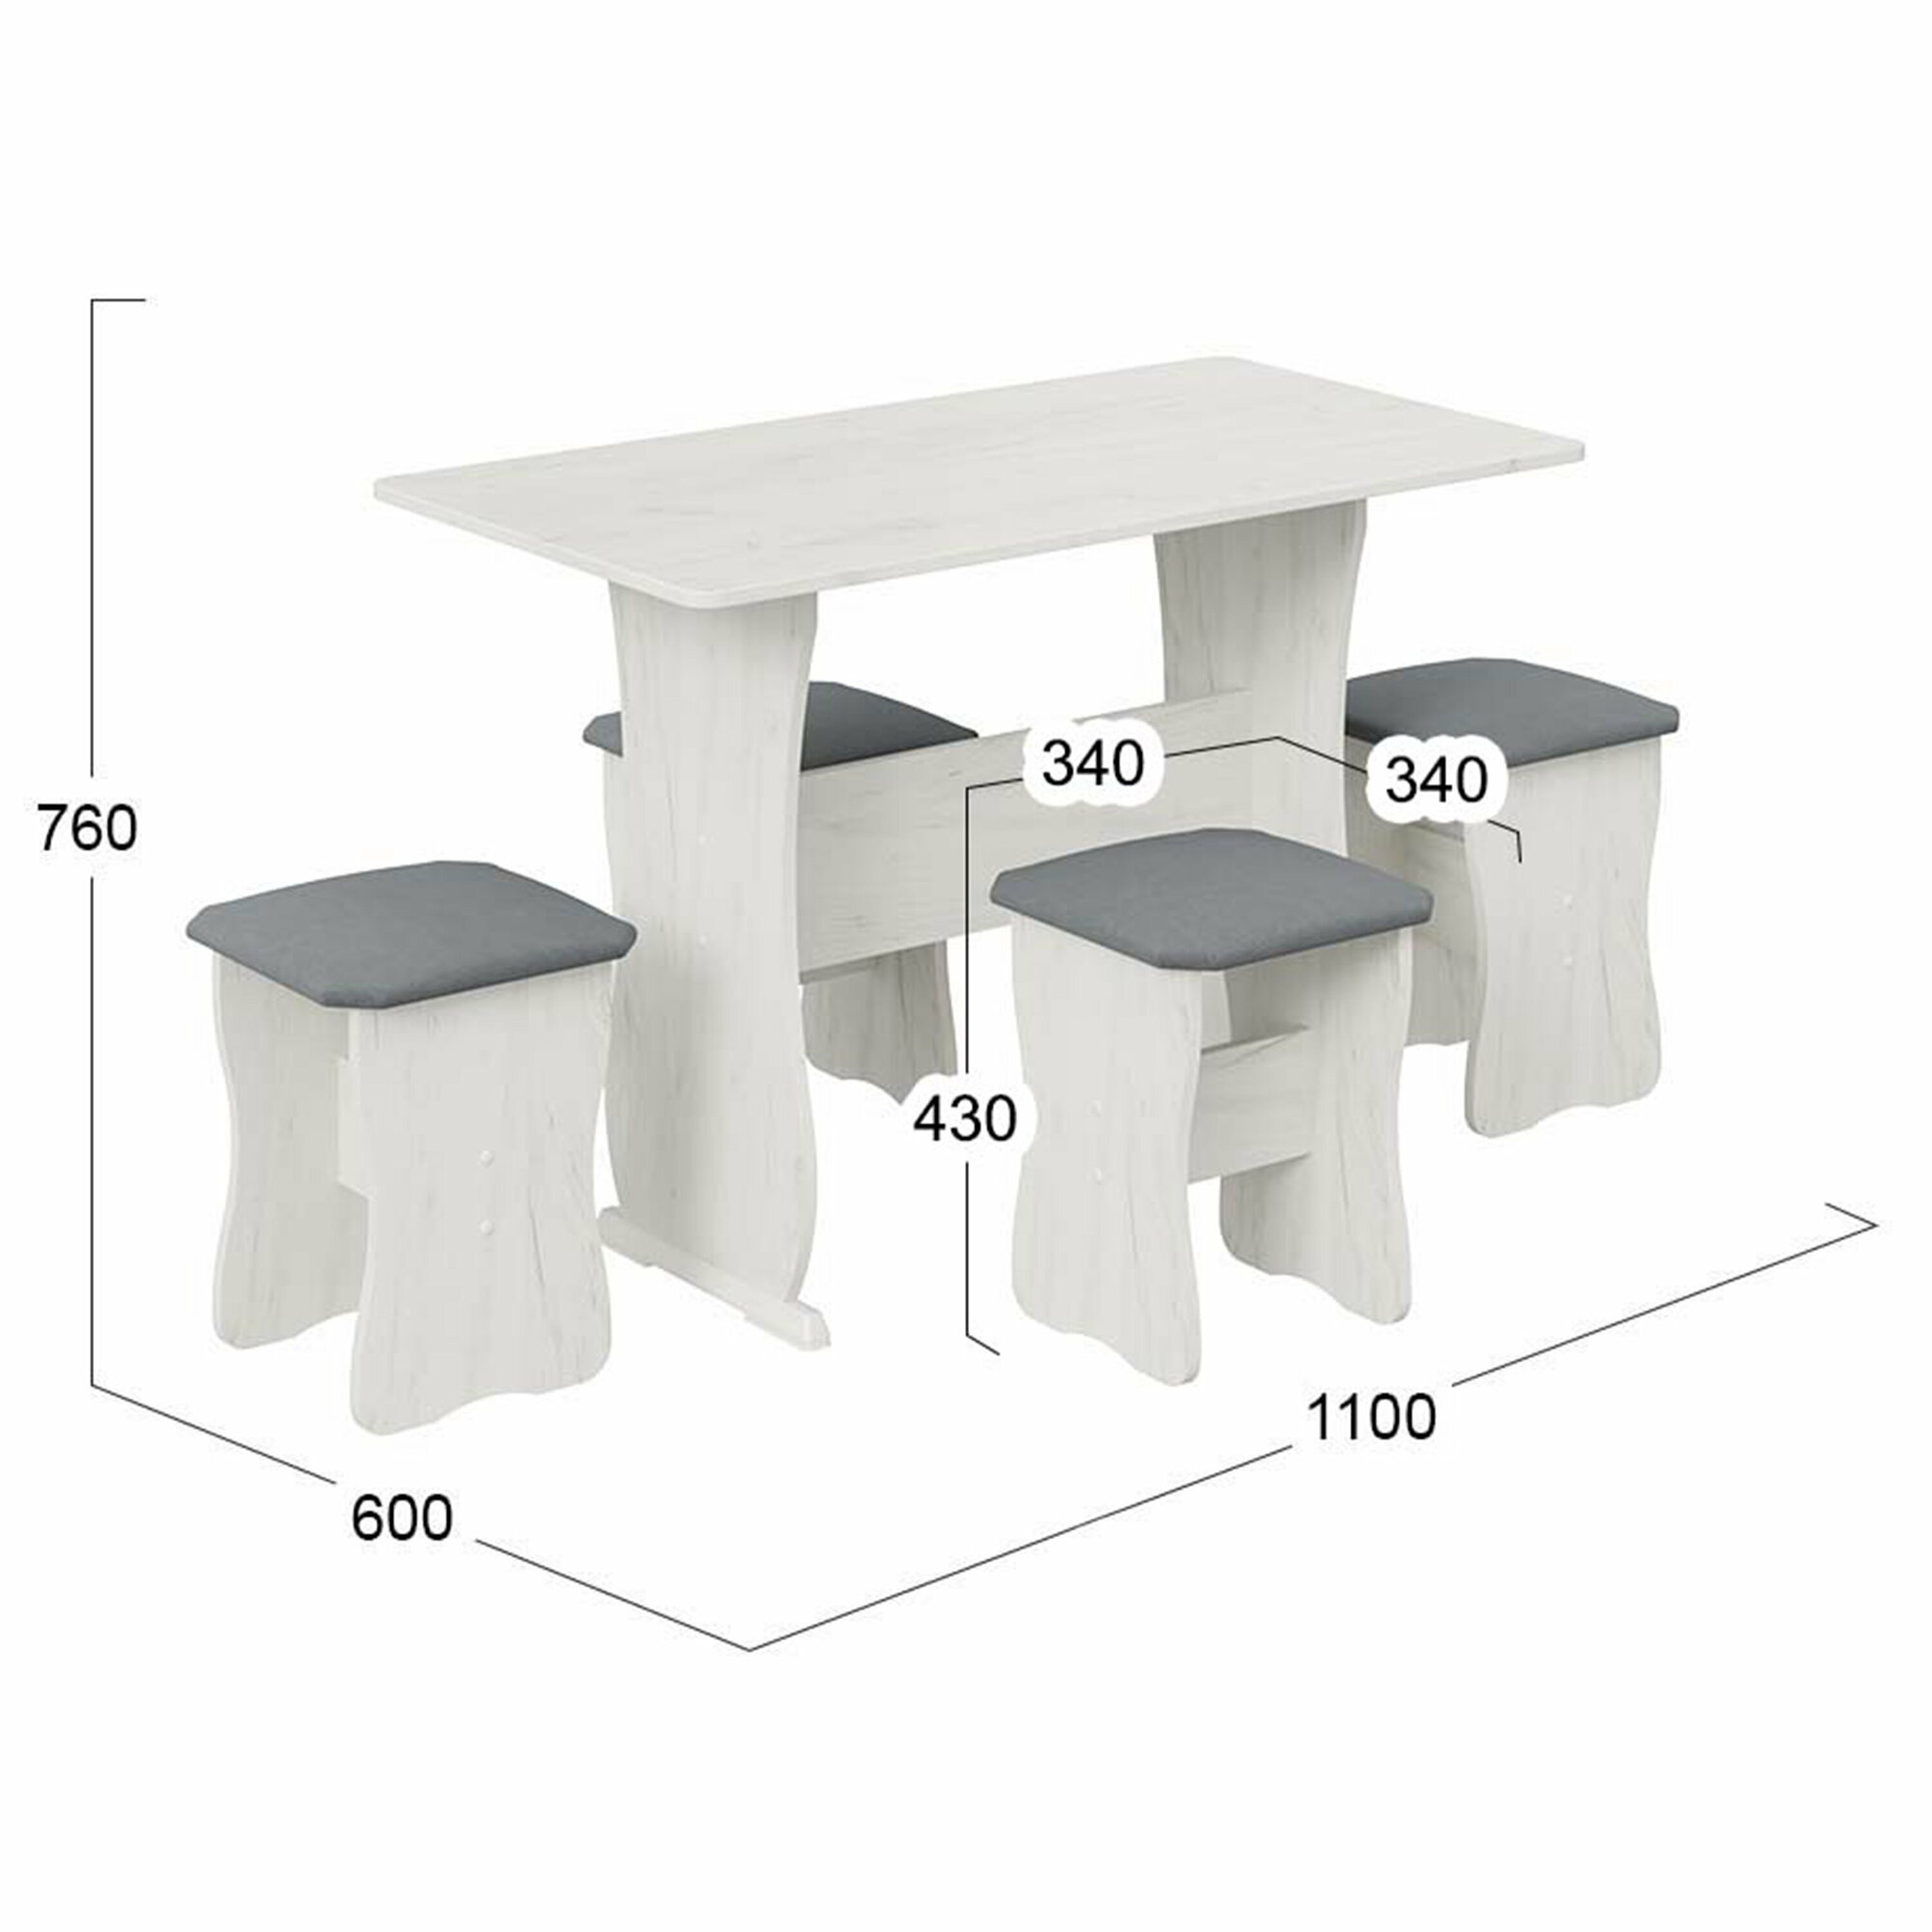 Обеденная группа со столом и табуретками, кухонный набор стол и 4 табурета, серый, Тип 1